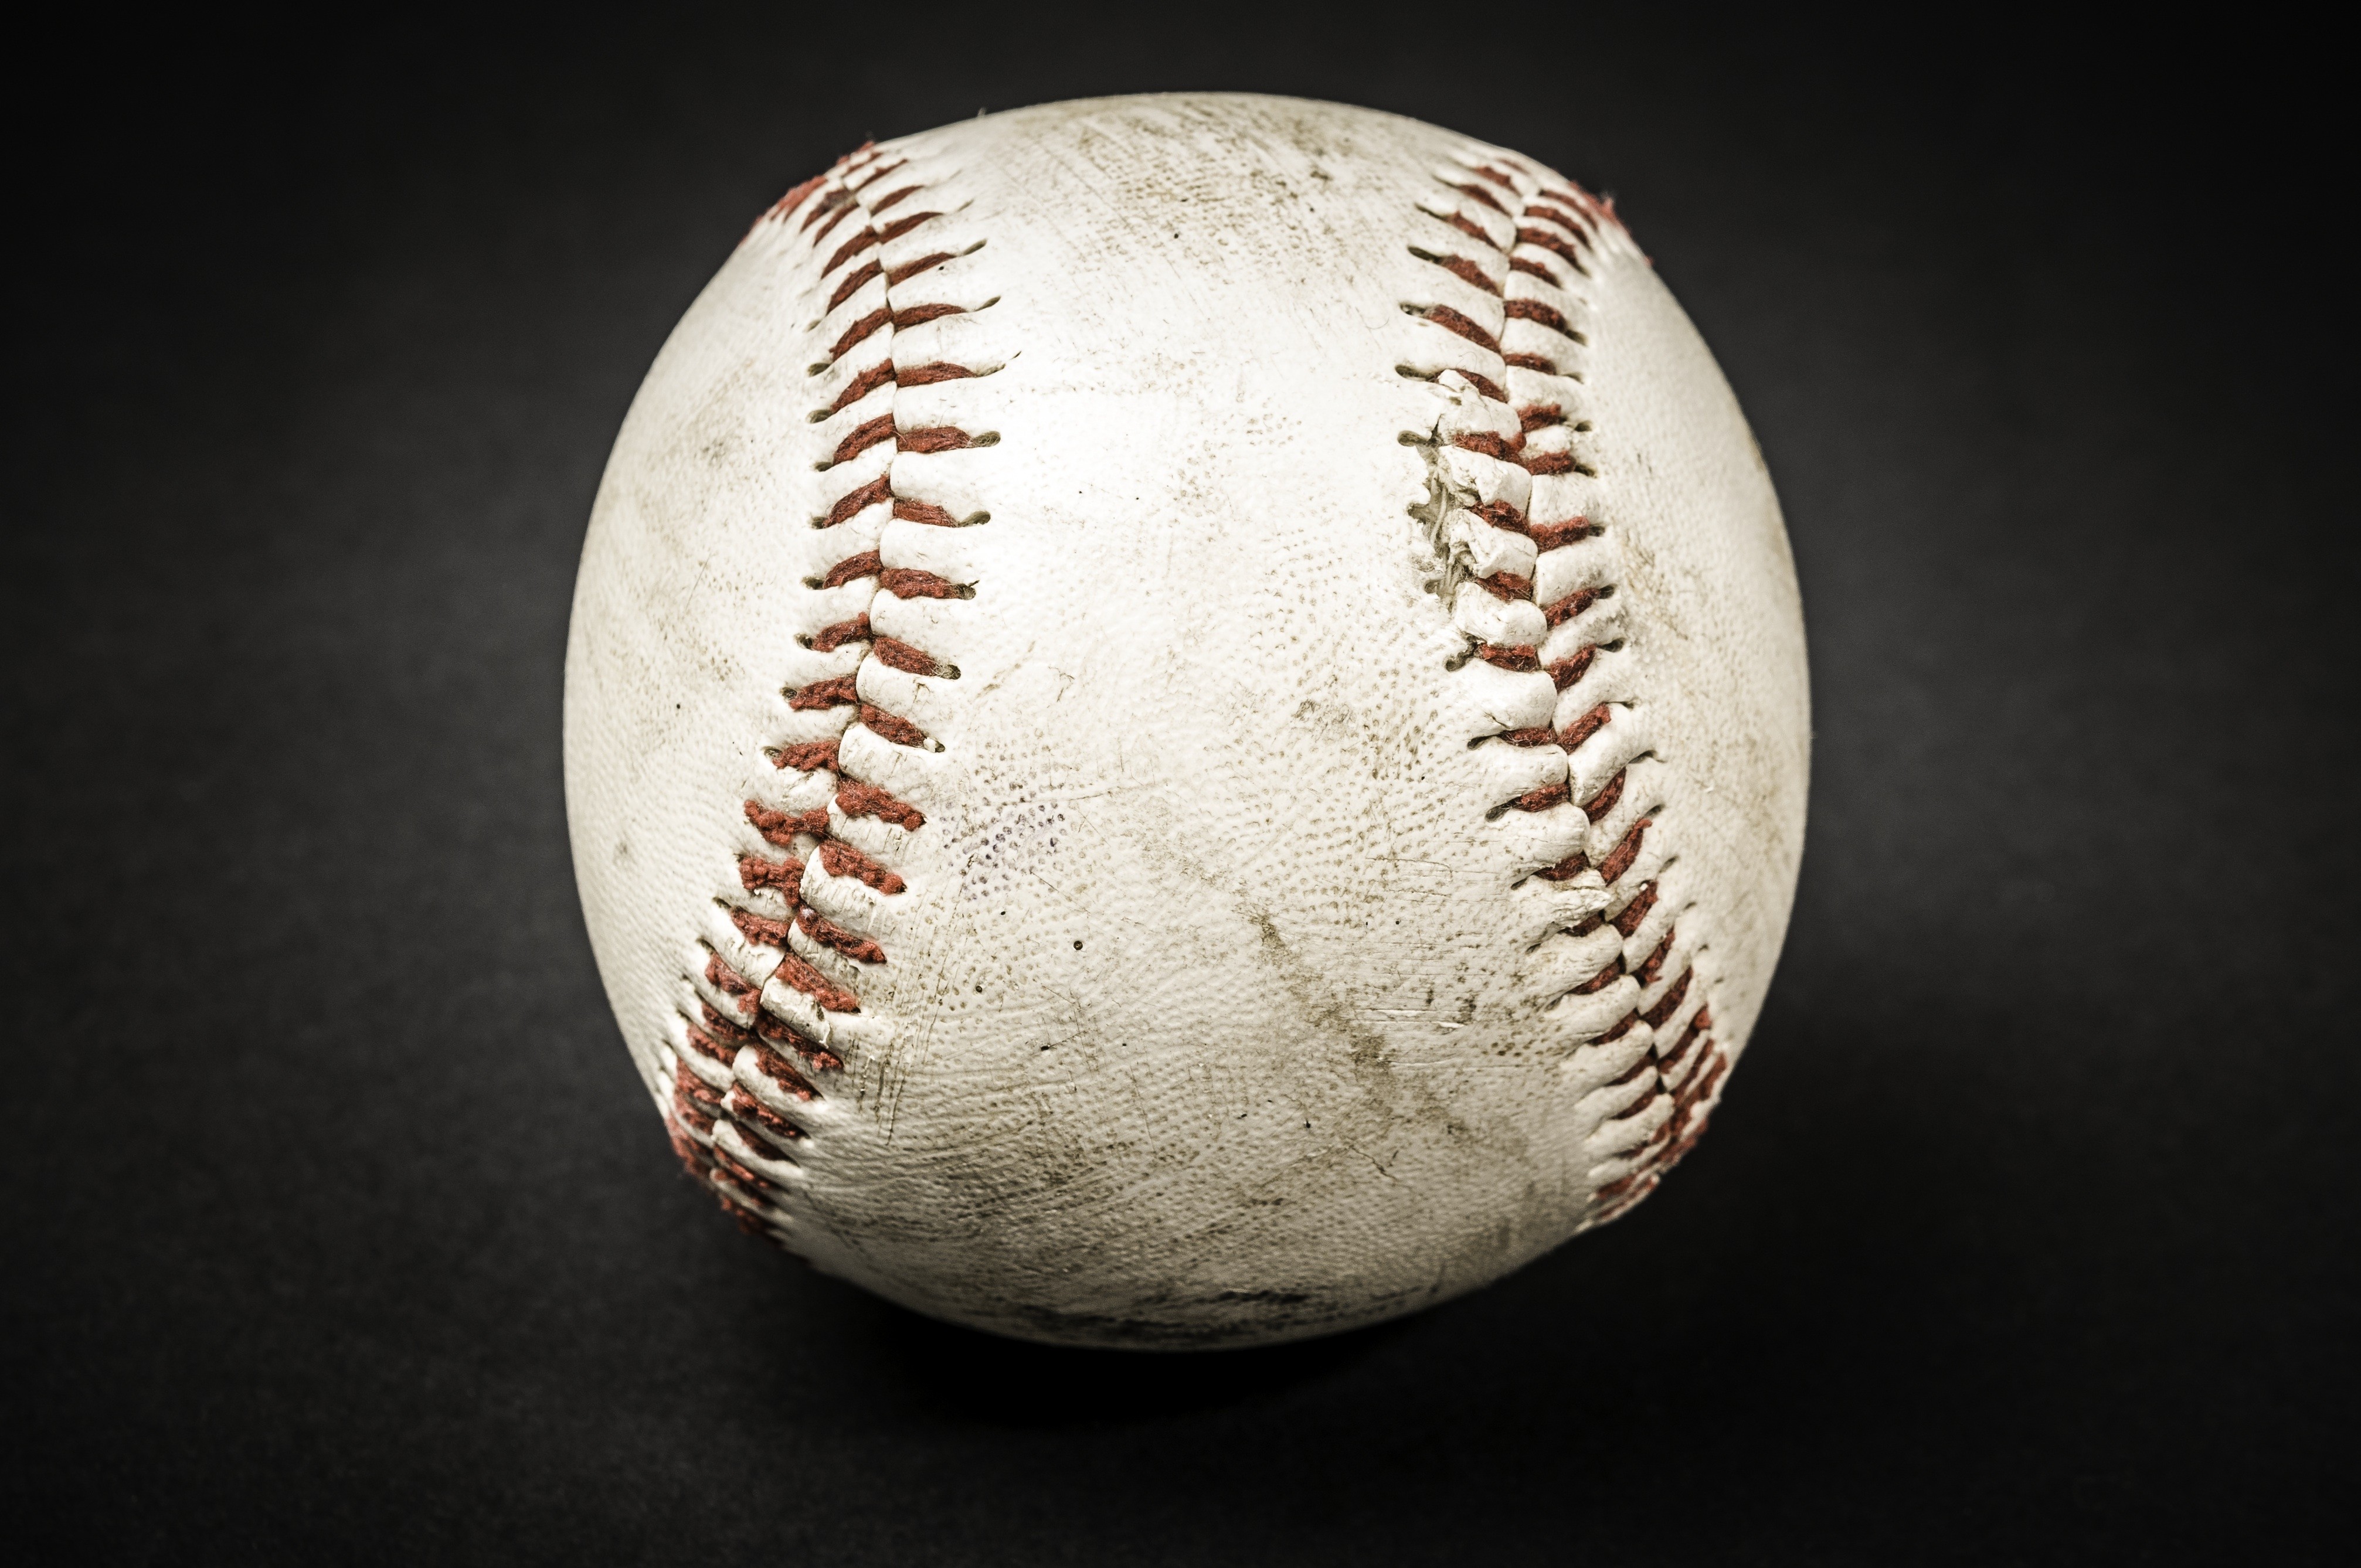 General 4027x2675 baseball ball white black simple background closeup